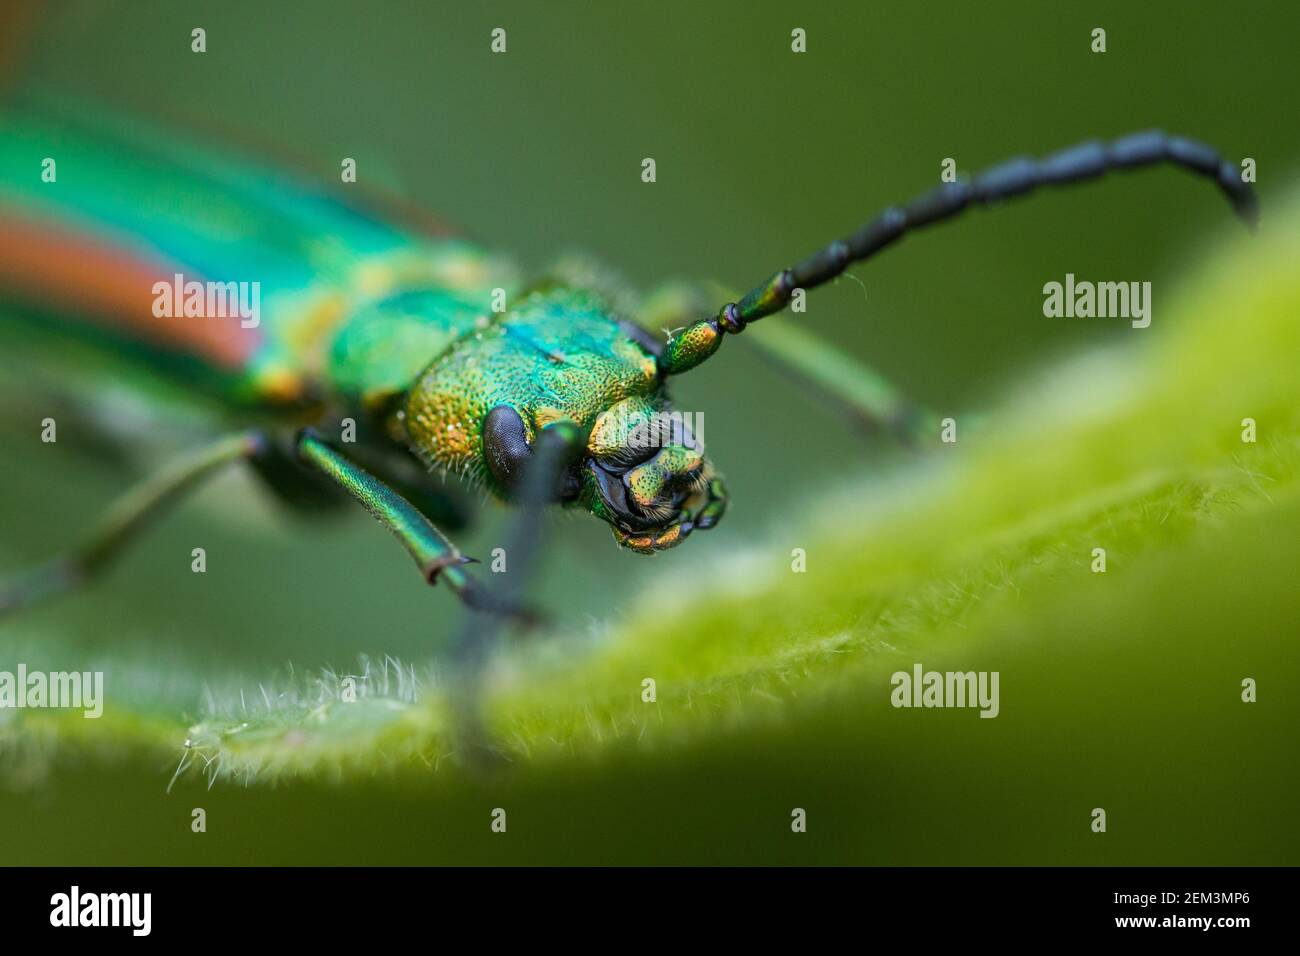 Spanish fly, blister beetle (Lytta vesicatoria togata, Cantharis vesicatoria), portrait, on a leaf, Kyrgyzstan Stock Photo